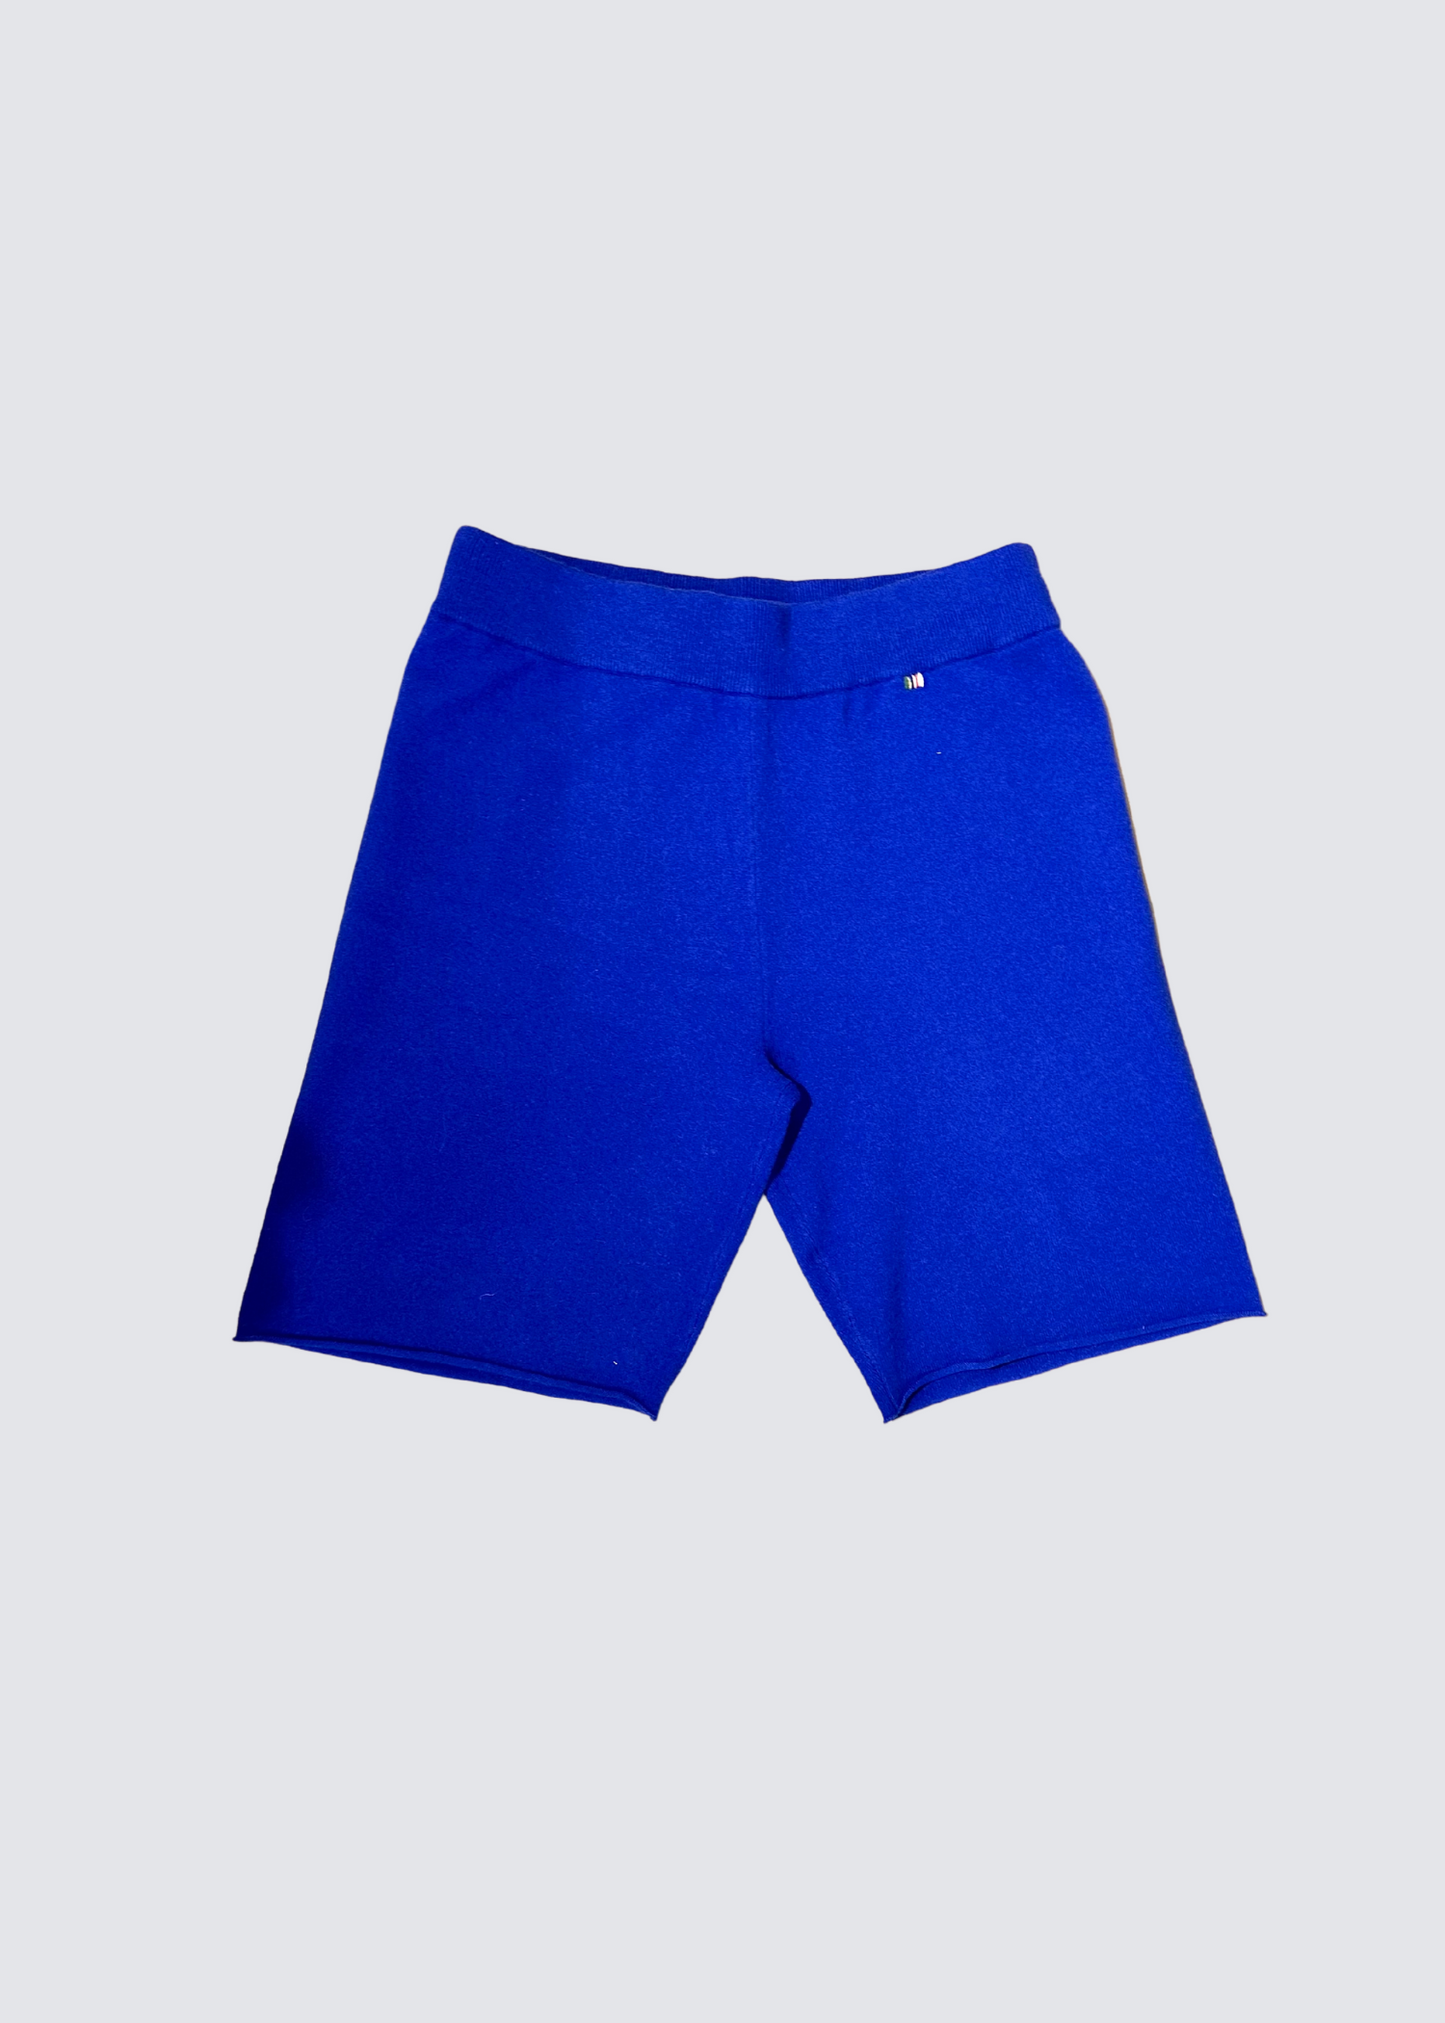 No 240, Laufen, Primary Blue, Shorts